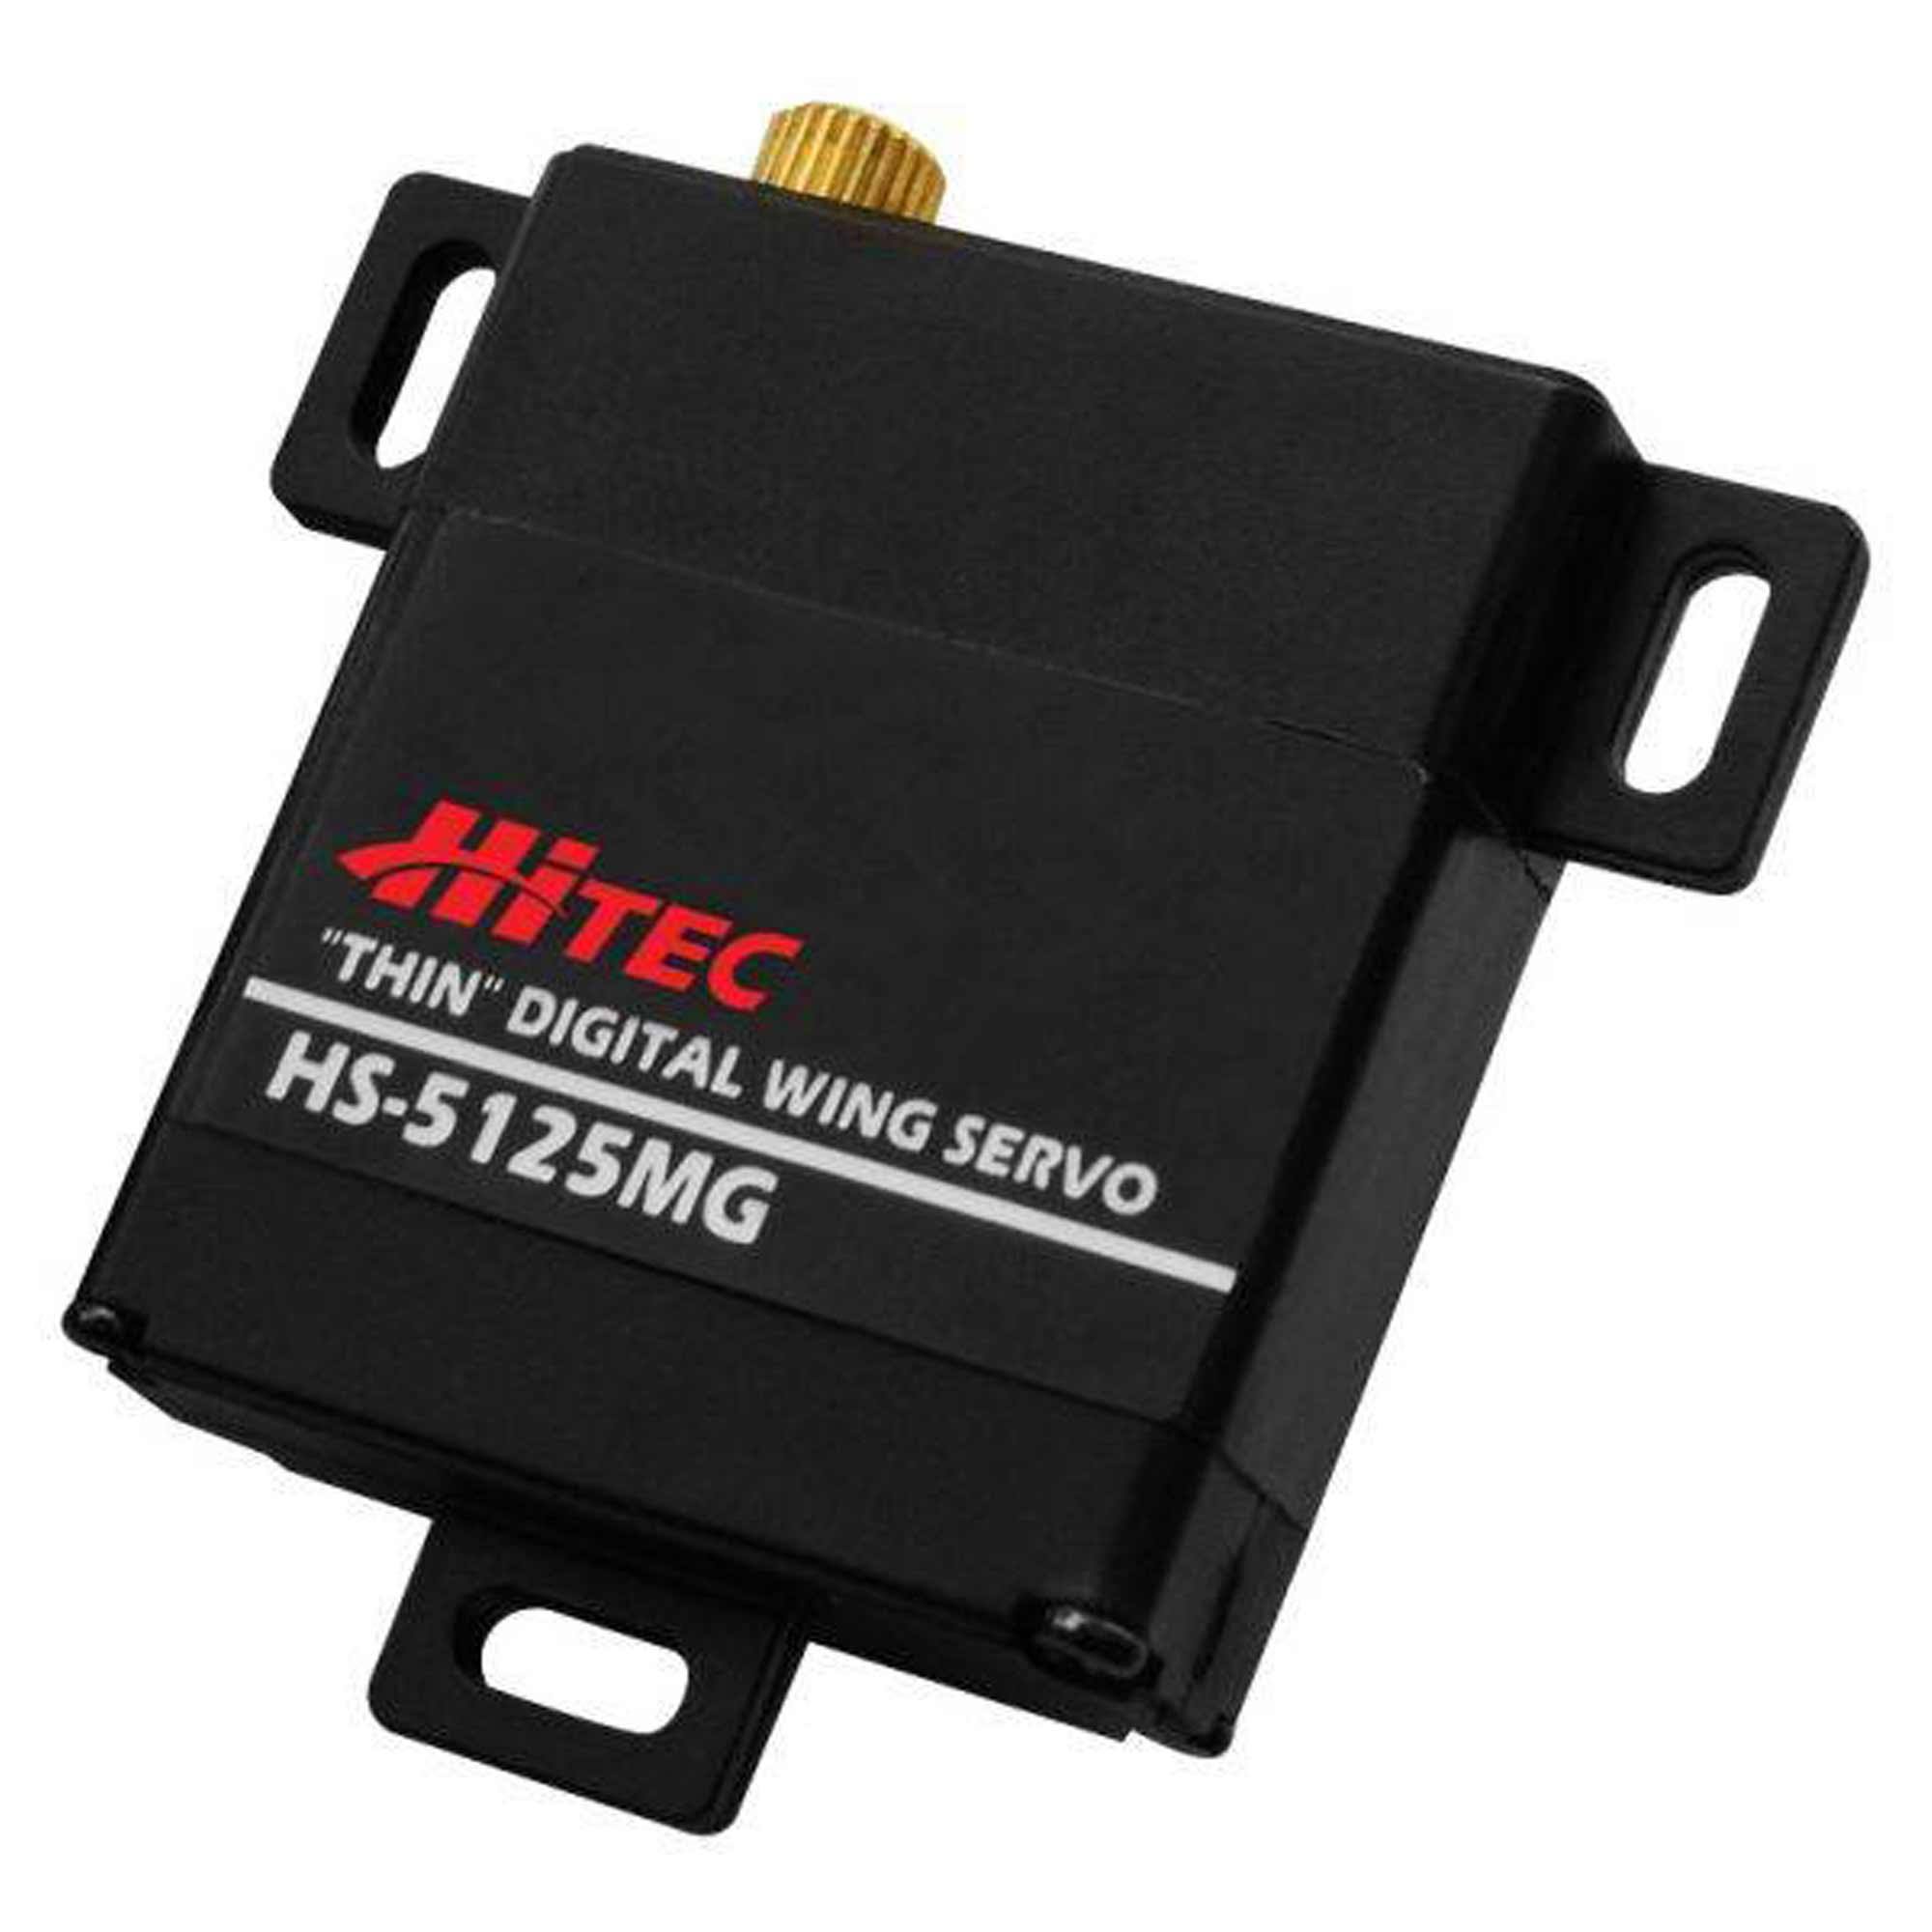 Hitec RCD Inc. Digital Wing Servo HS-5125MG: Universal (HRC35125S)